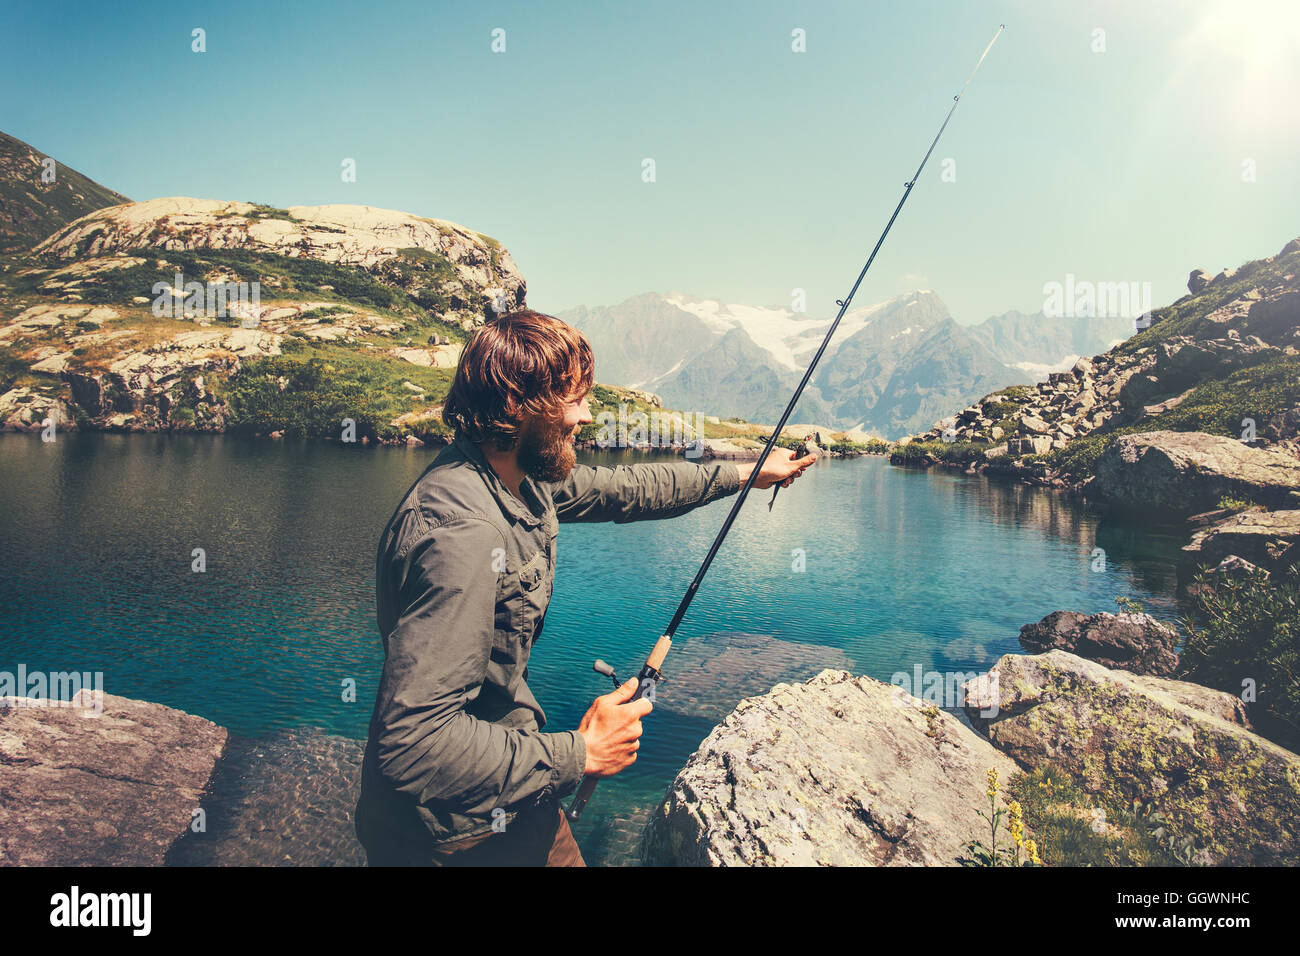 https://c8.alamy.com/comp/GGWNHC/man-fisherman-fishing-with-rod-alone-lake-and-mountains-landscape-GGWNHC.jpg